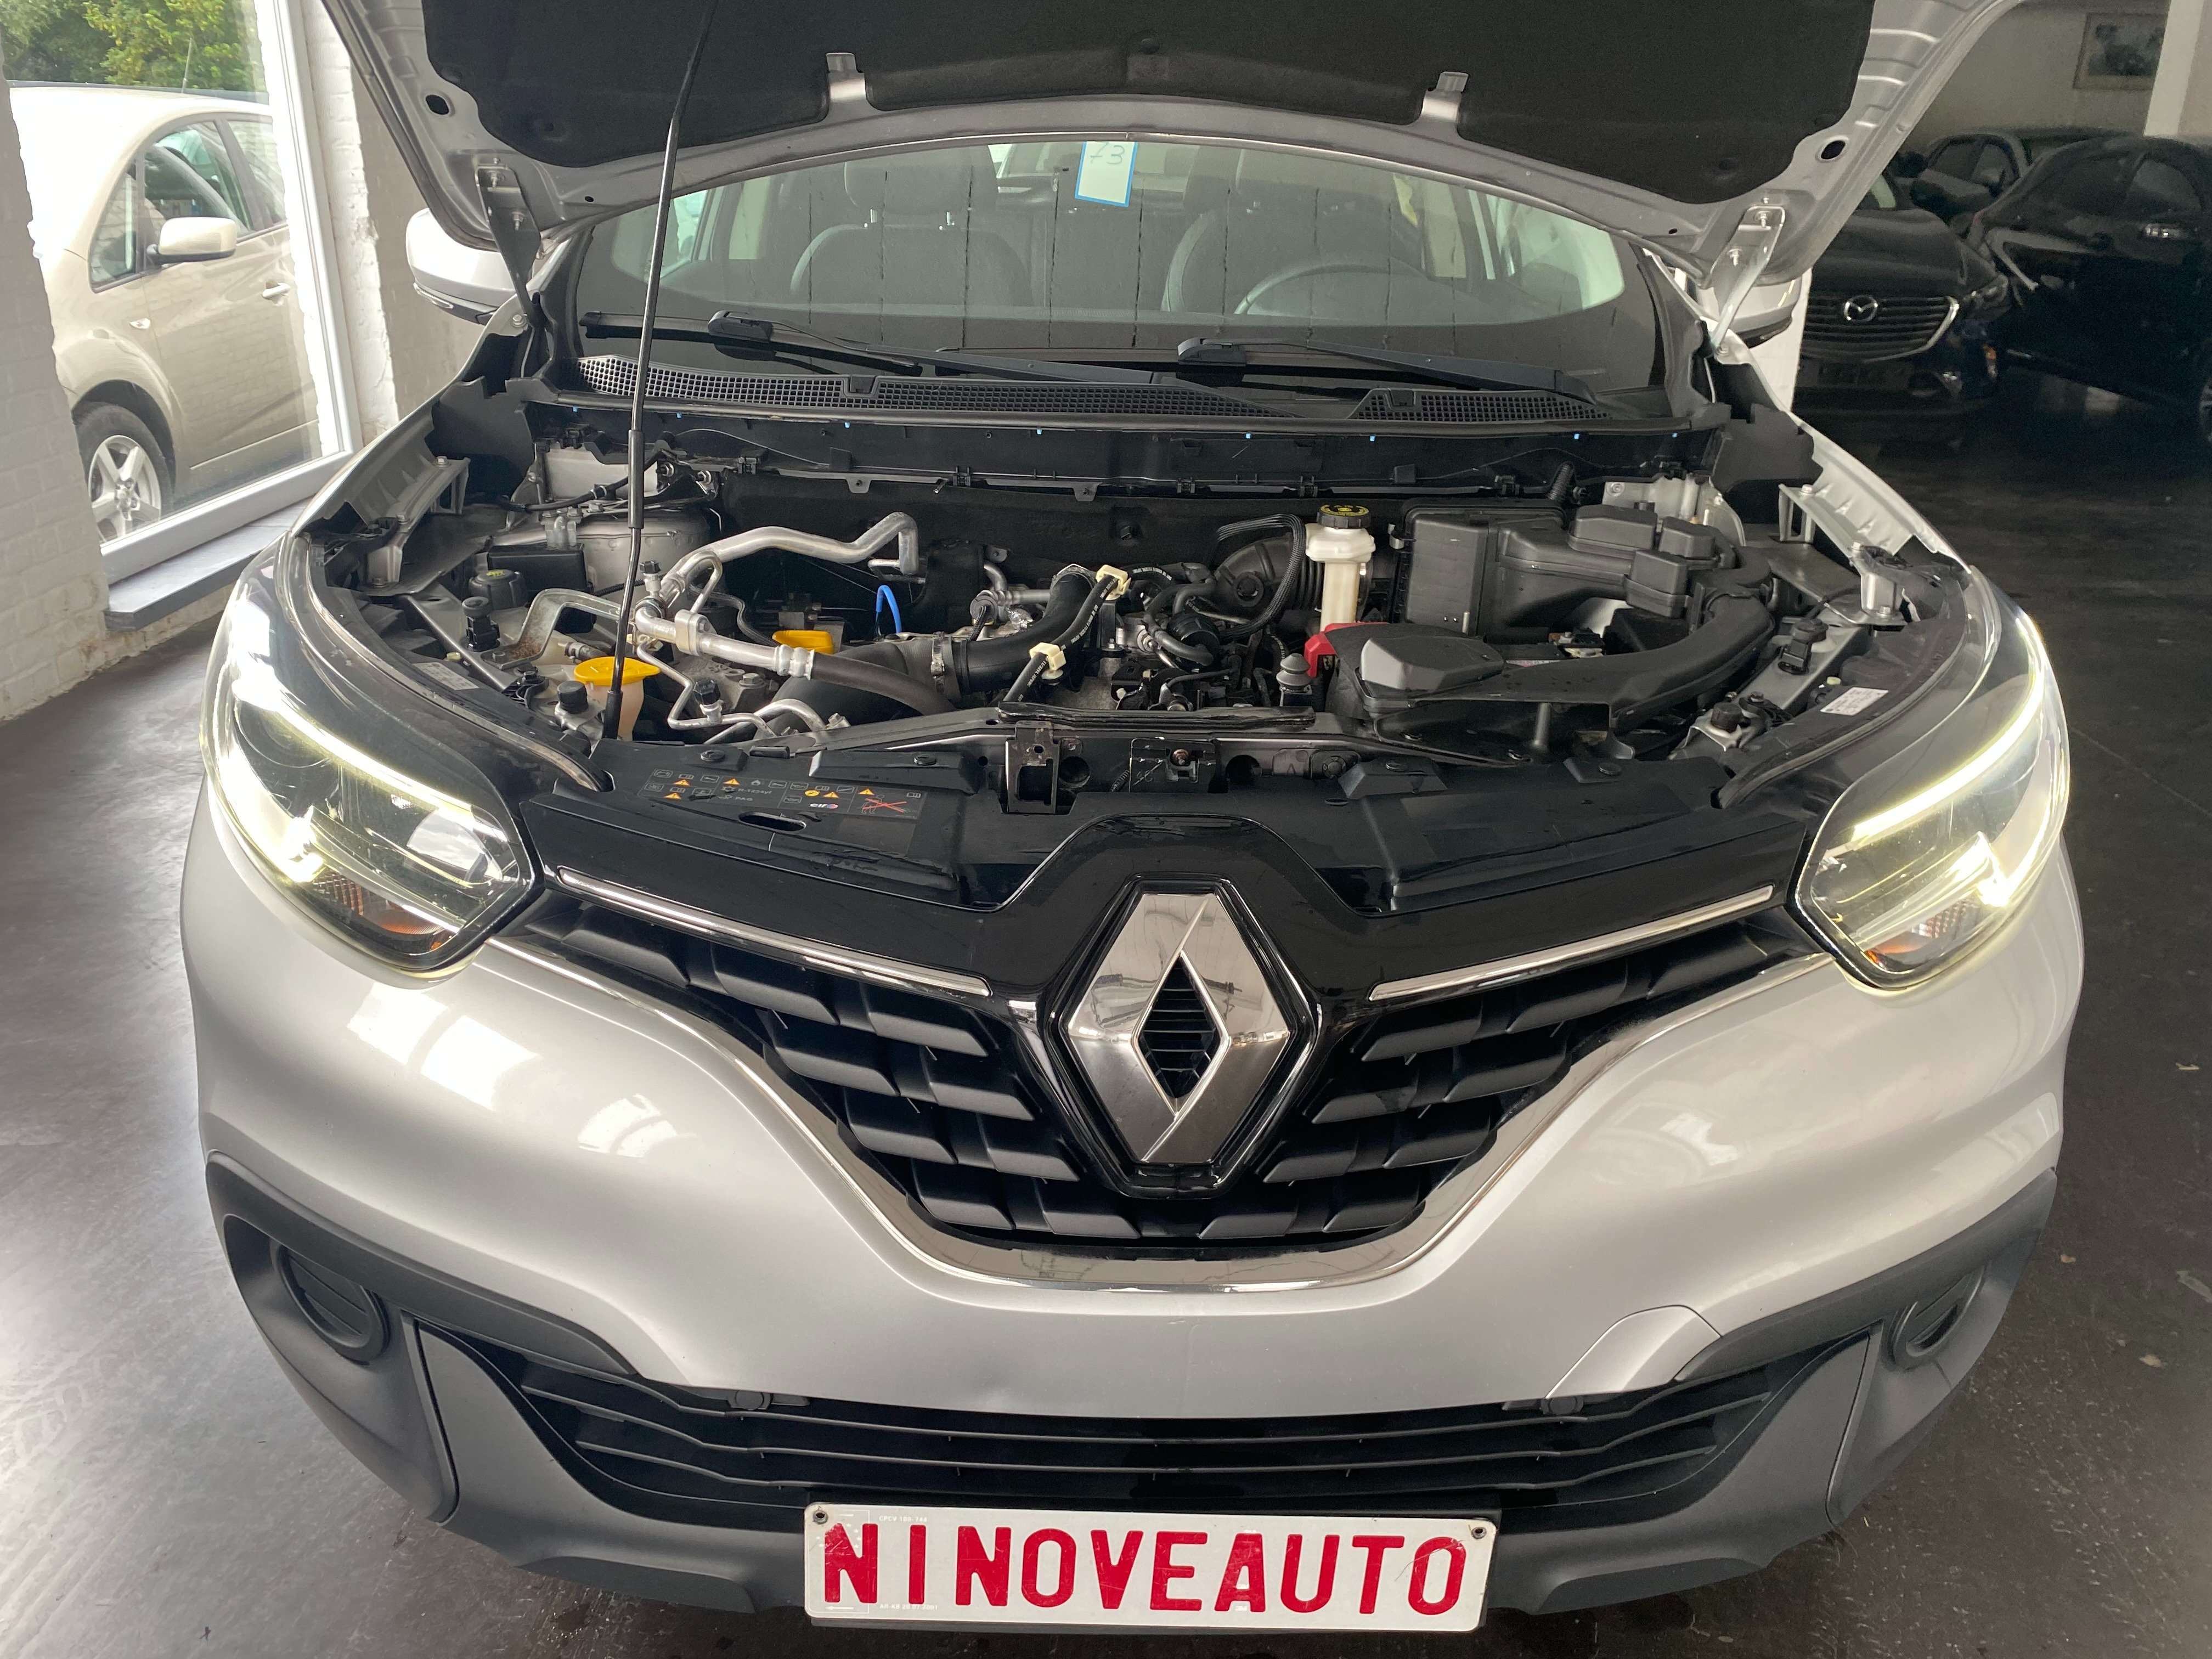 Ninove auto - Renault Kadjar